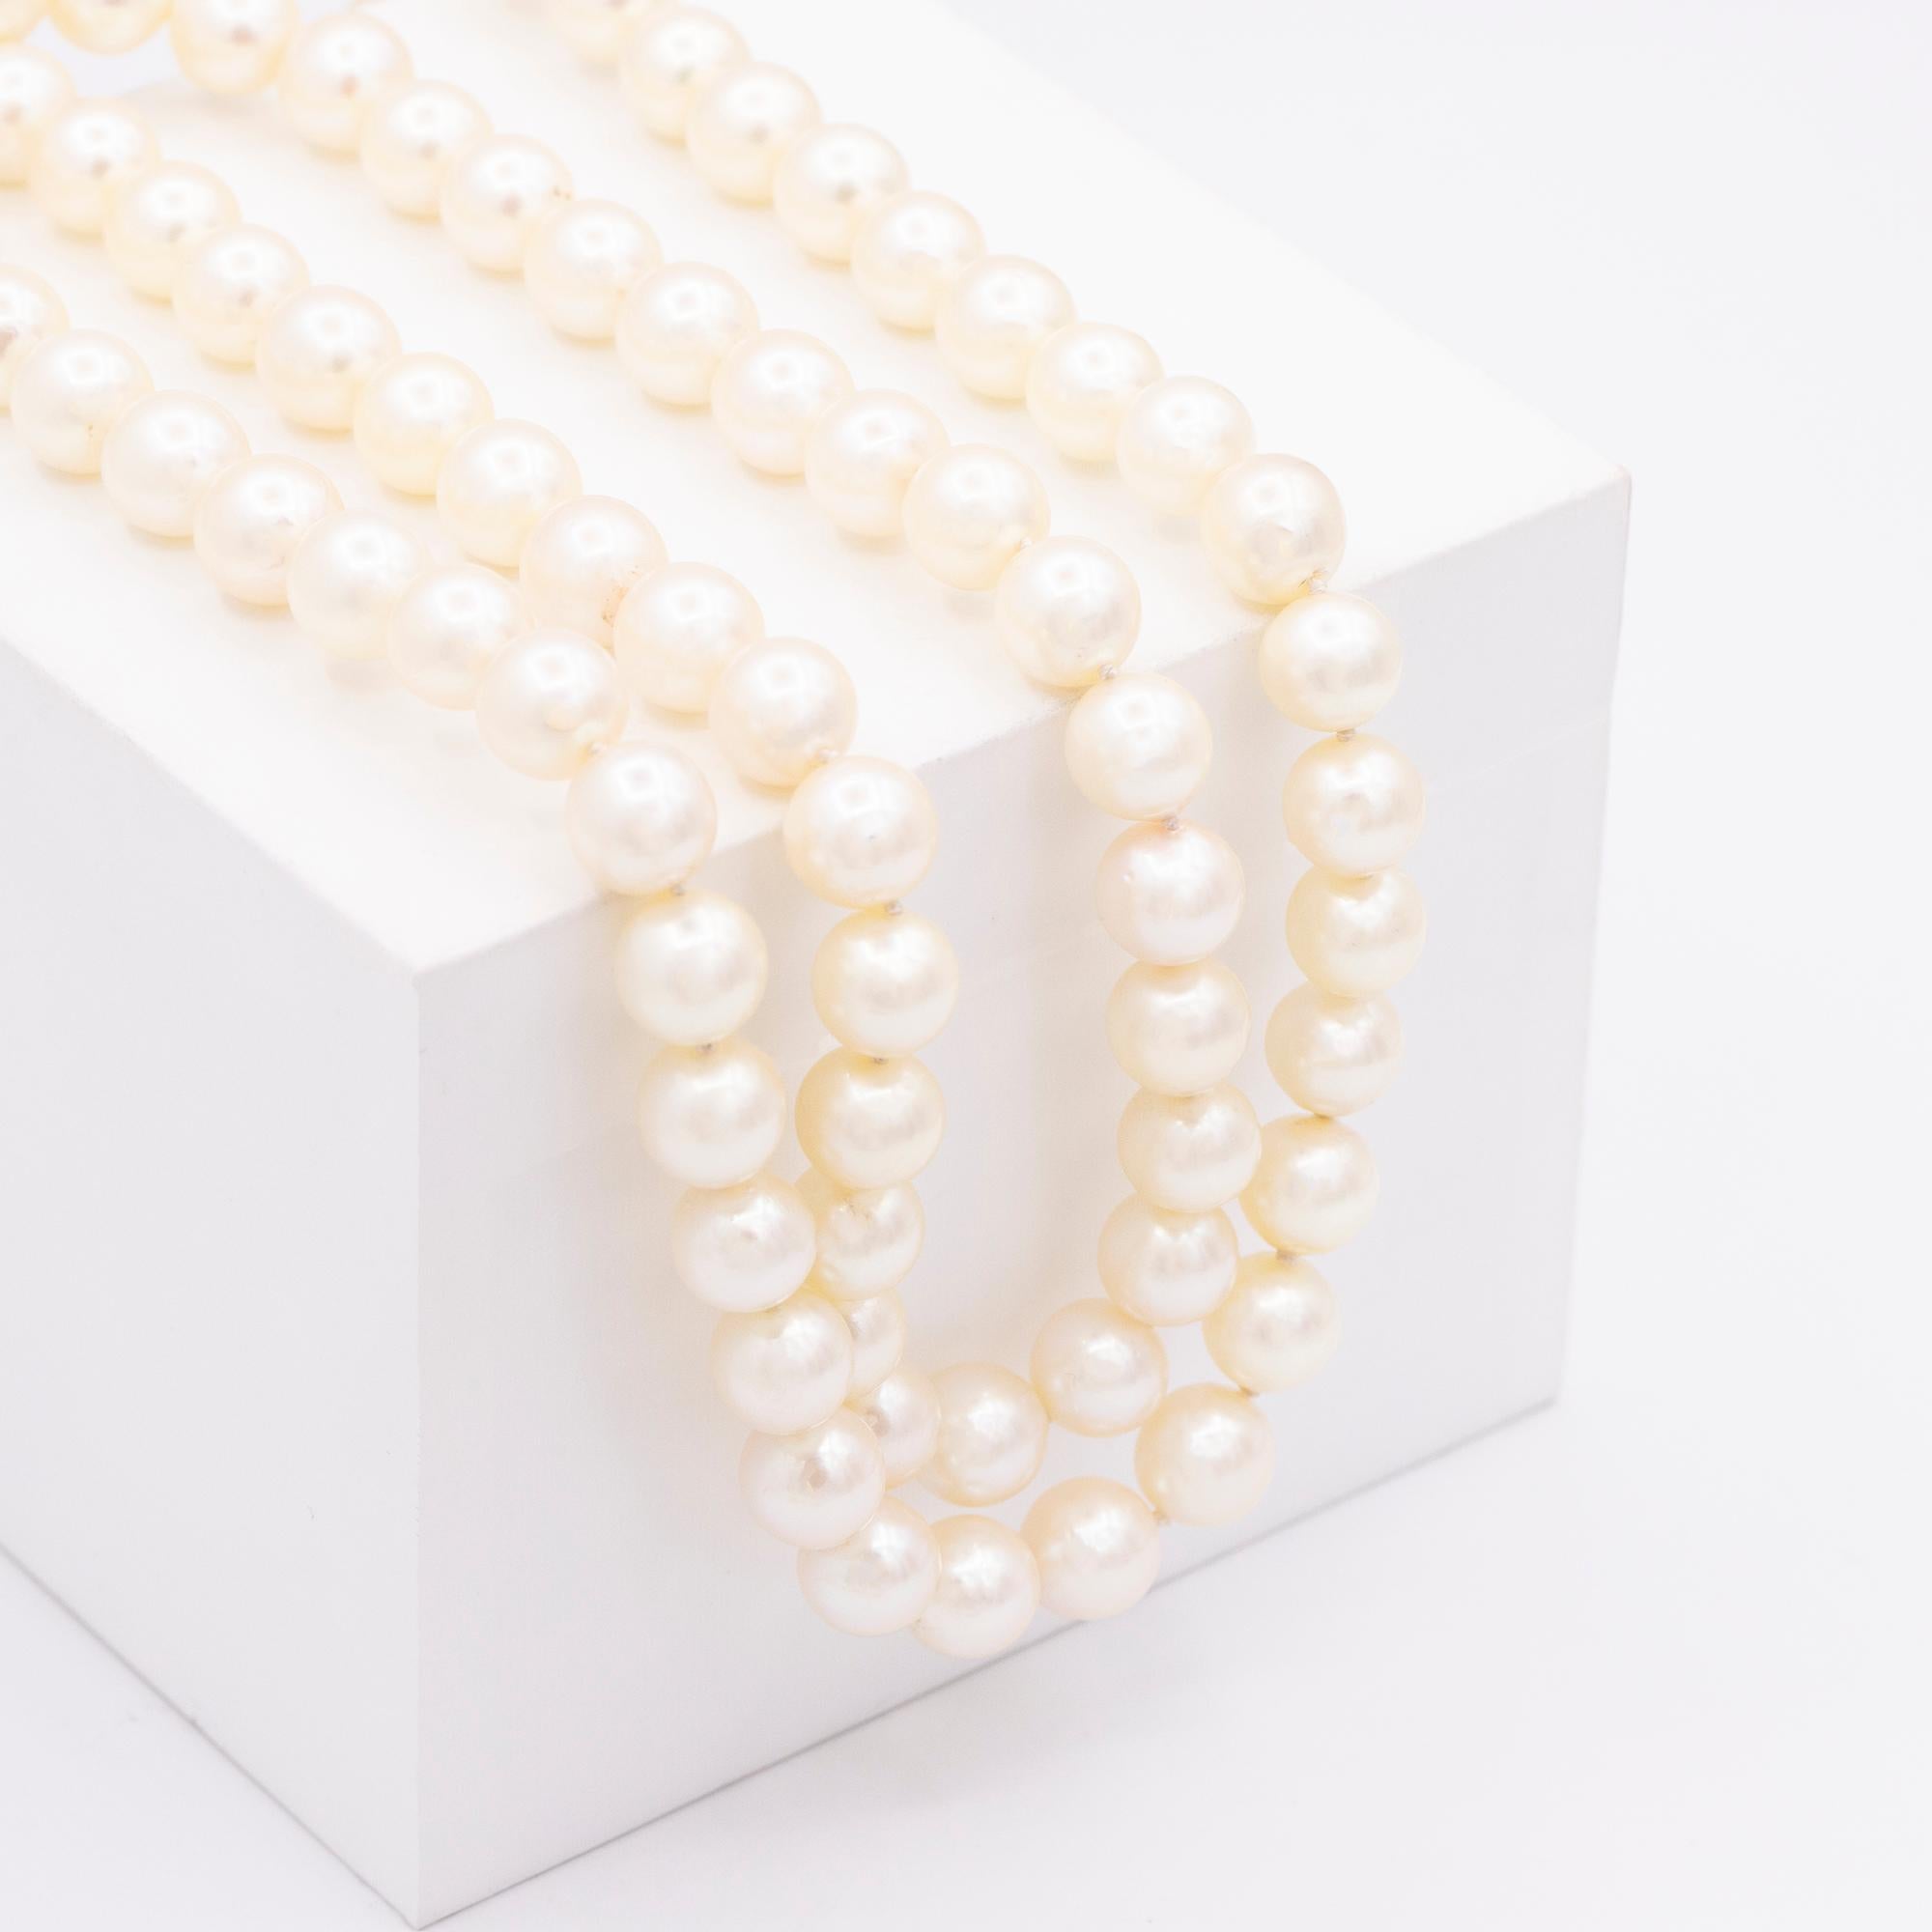 vintage akoya pearl necklace